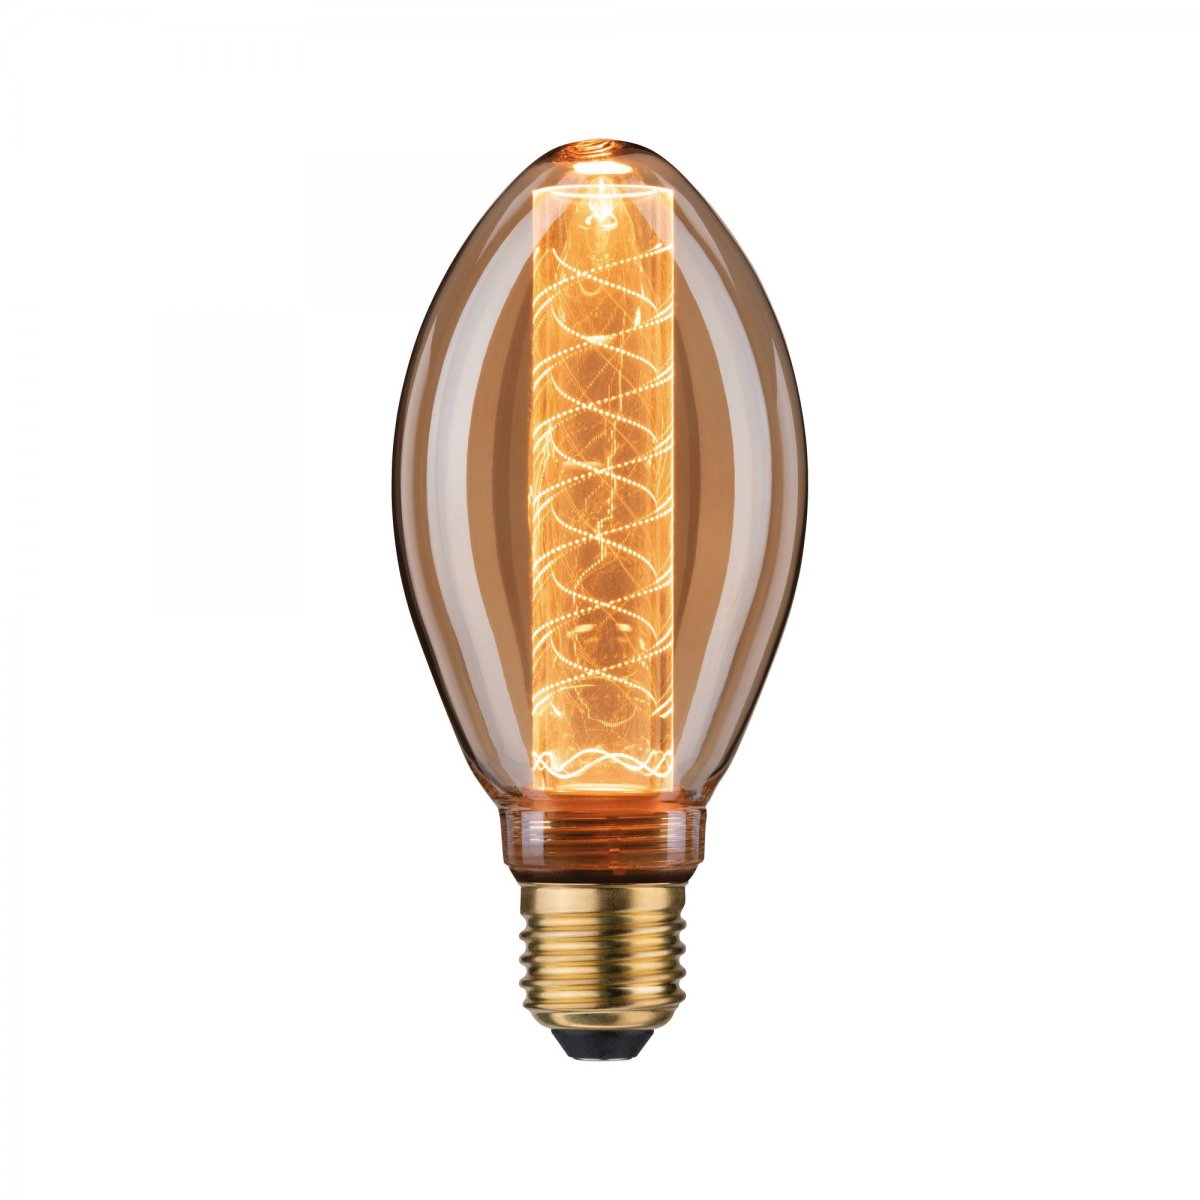 Vintage-Birne Leuchten Spiralmuster Paulmann Gold No. Inner Glow kaufen E27 online dimmbar LED --> Lampen B75 28827 &